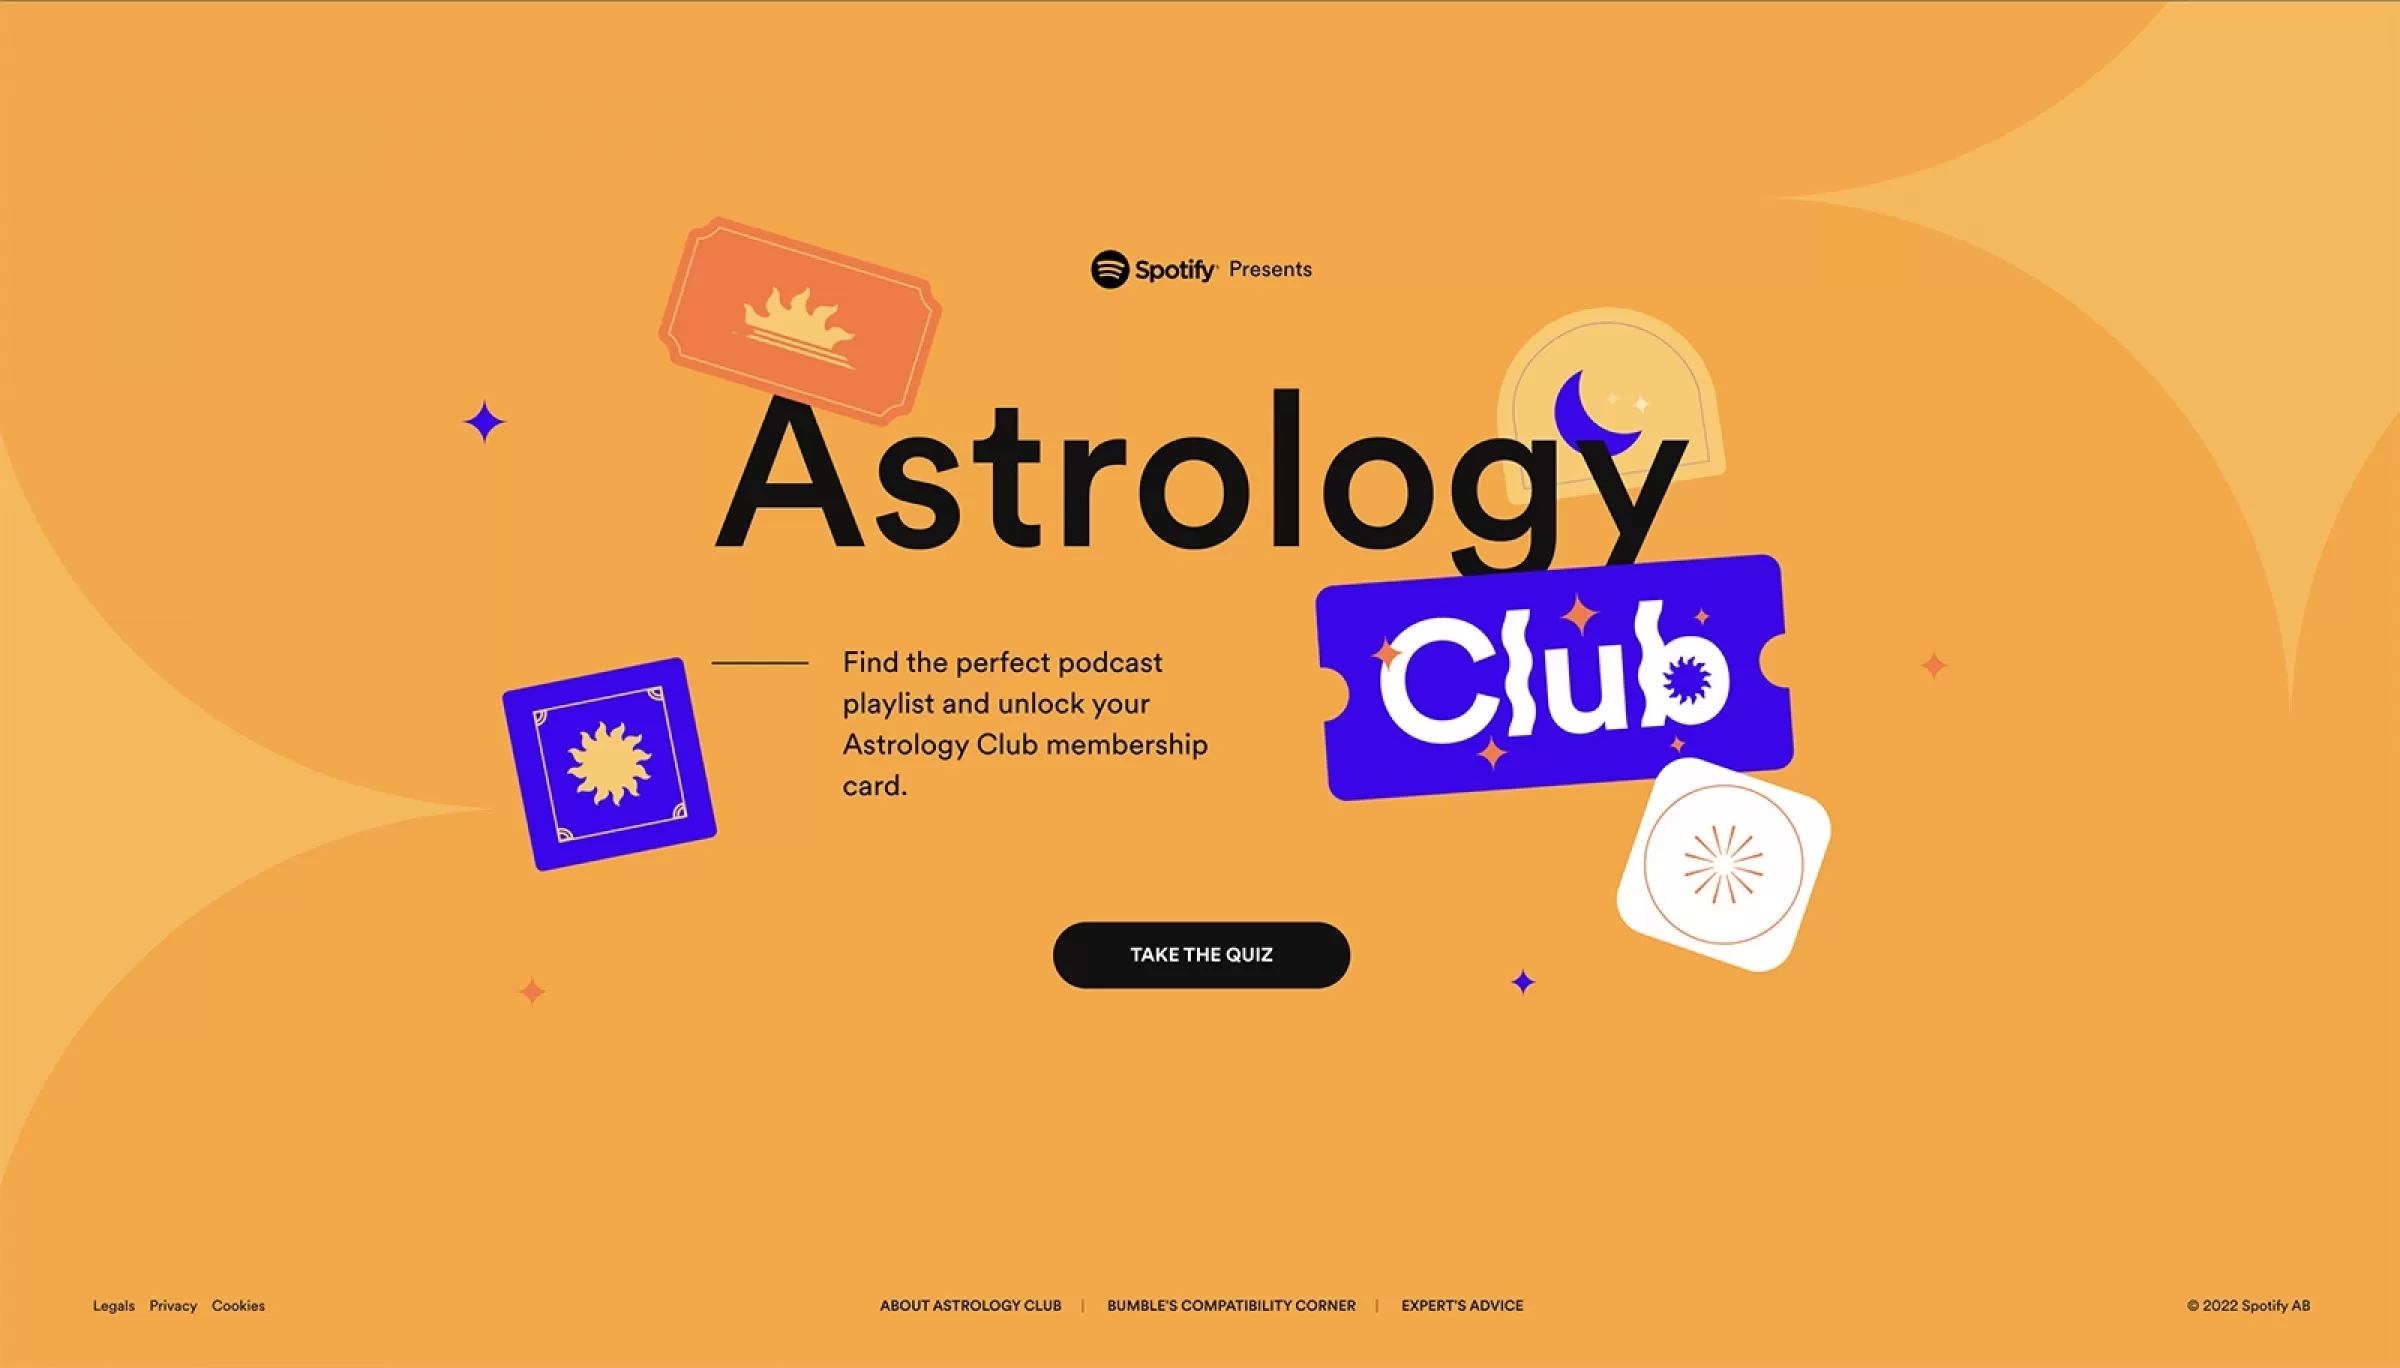 Astrology Club by Spotify